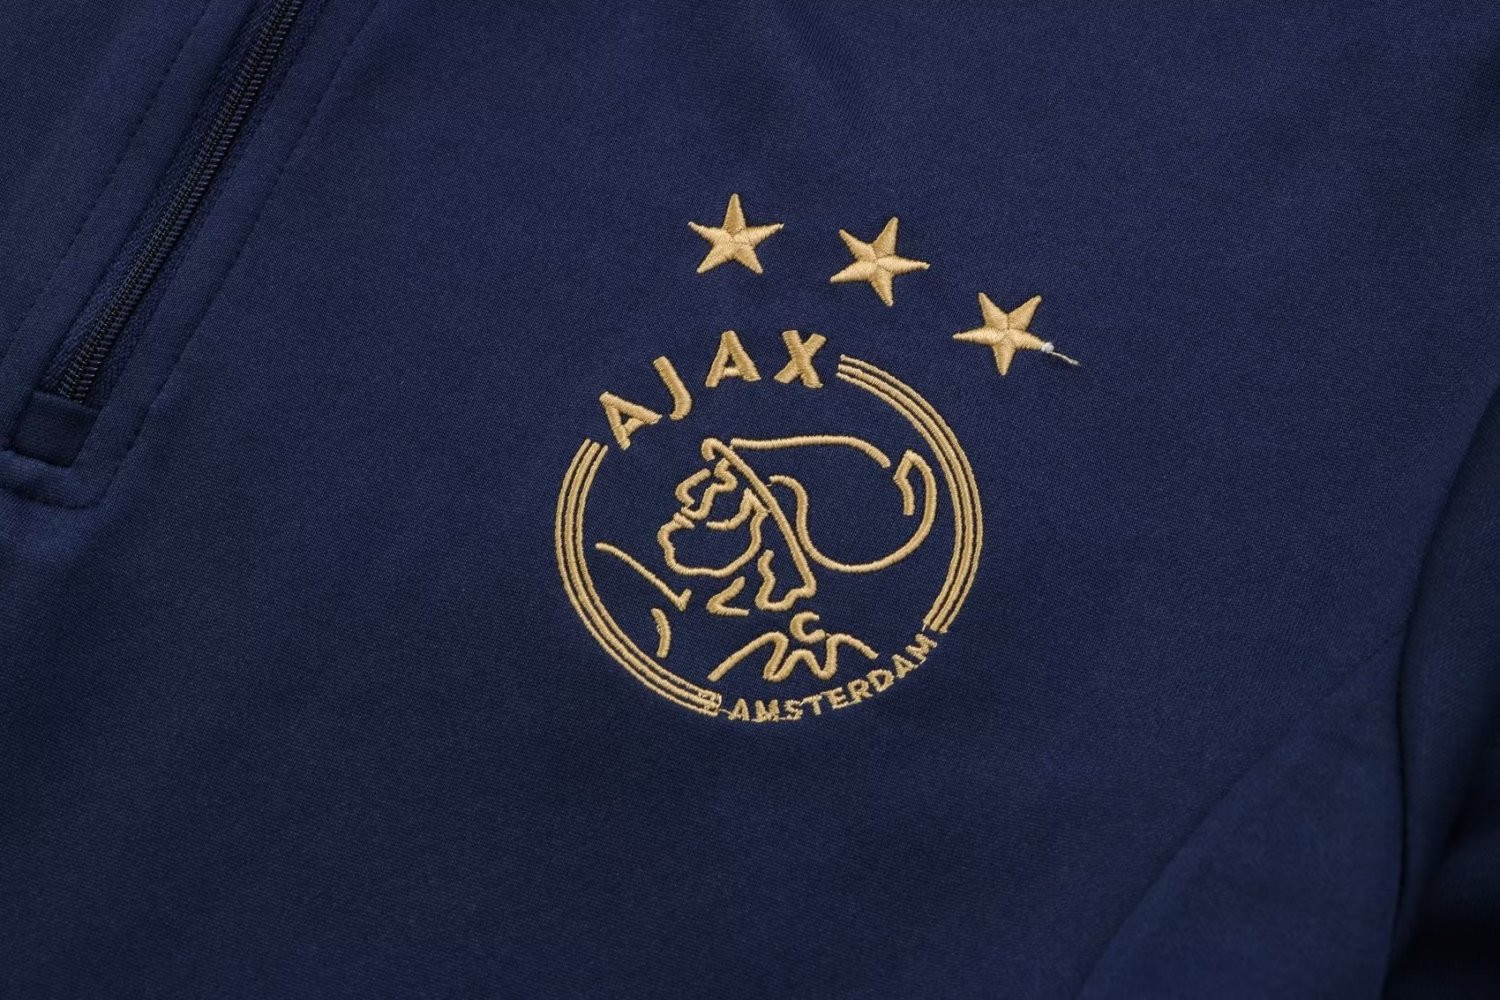 Ajax Soccer Training Suit Royal 2022/23 Mens